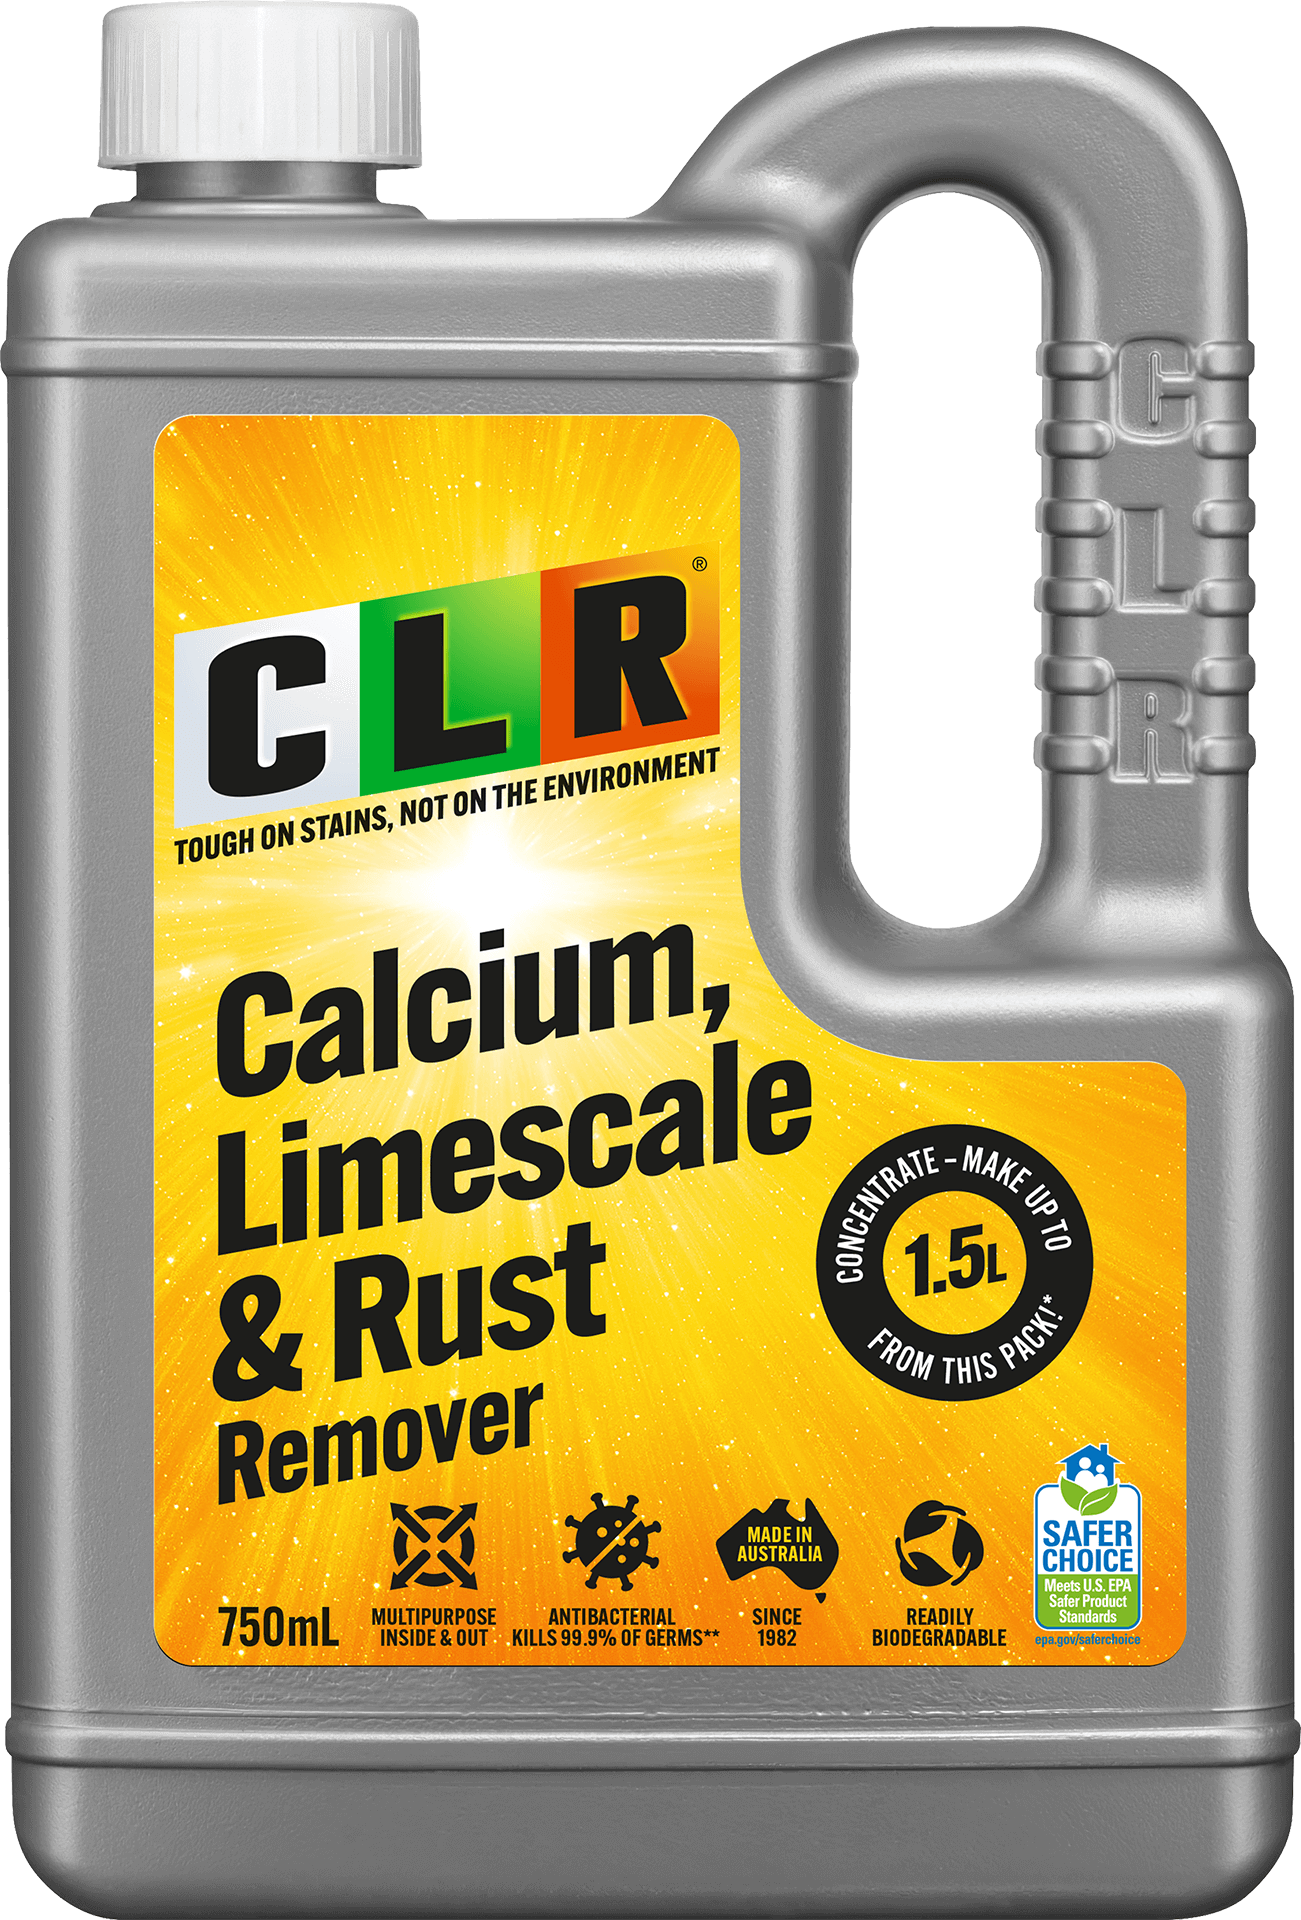 CLR Calcium, Limescale & Rust Remover 750ML